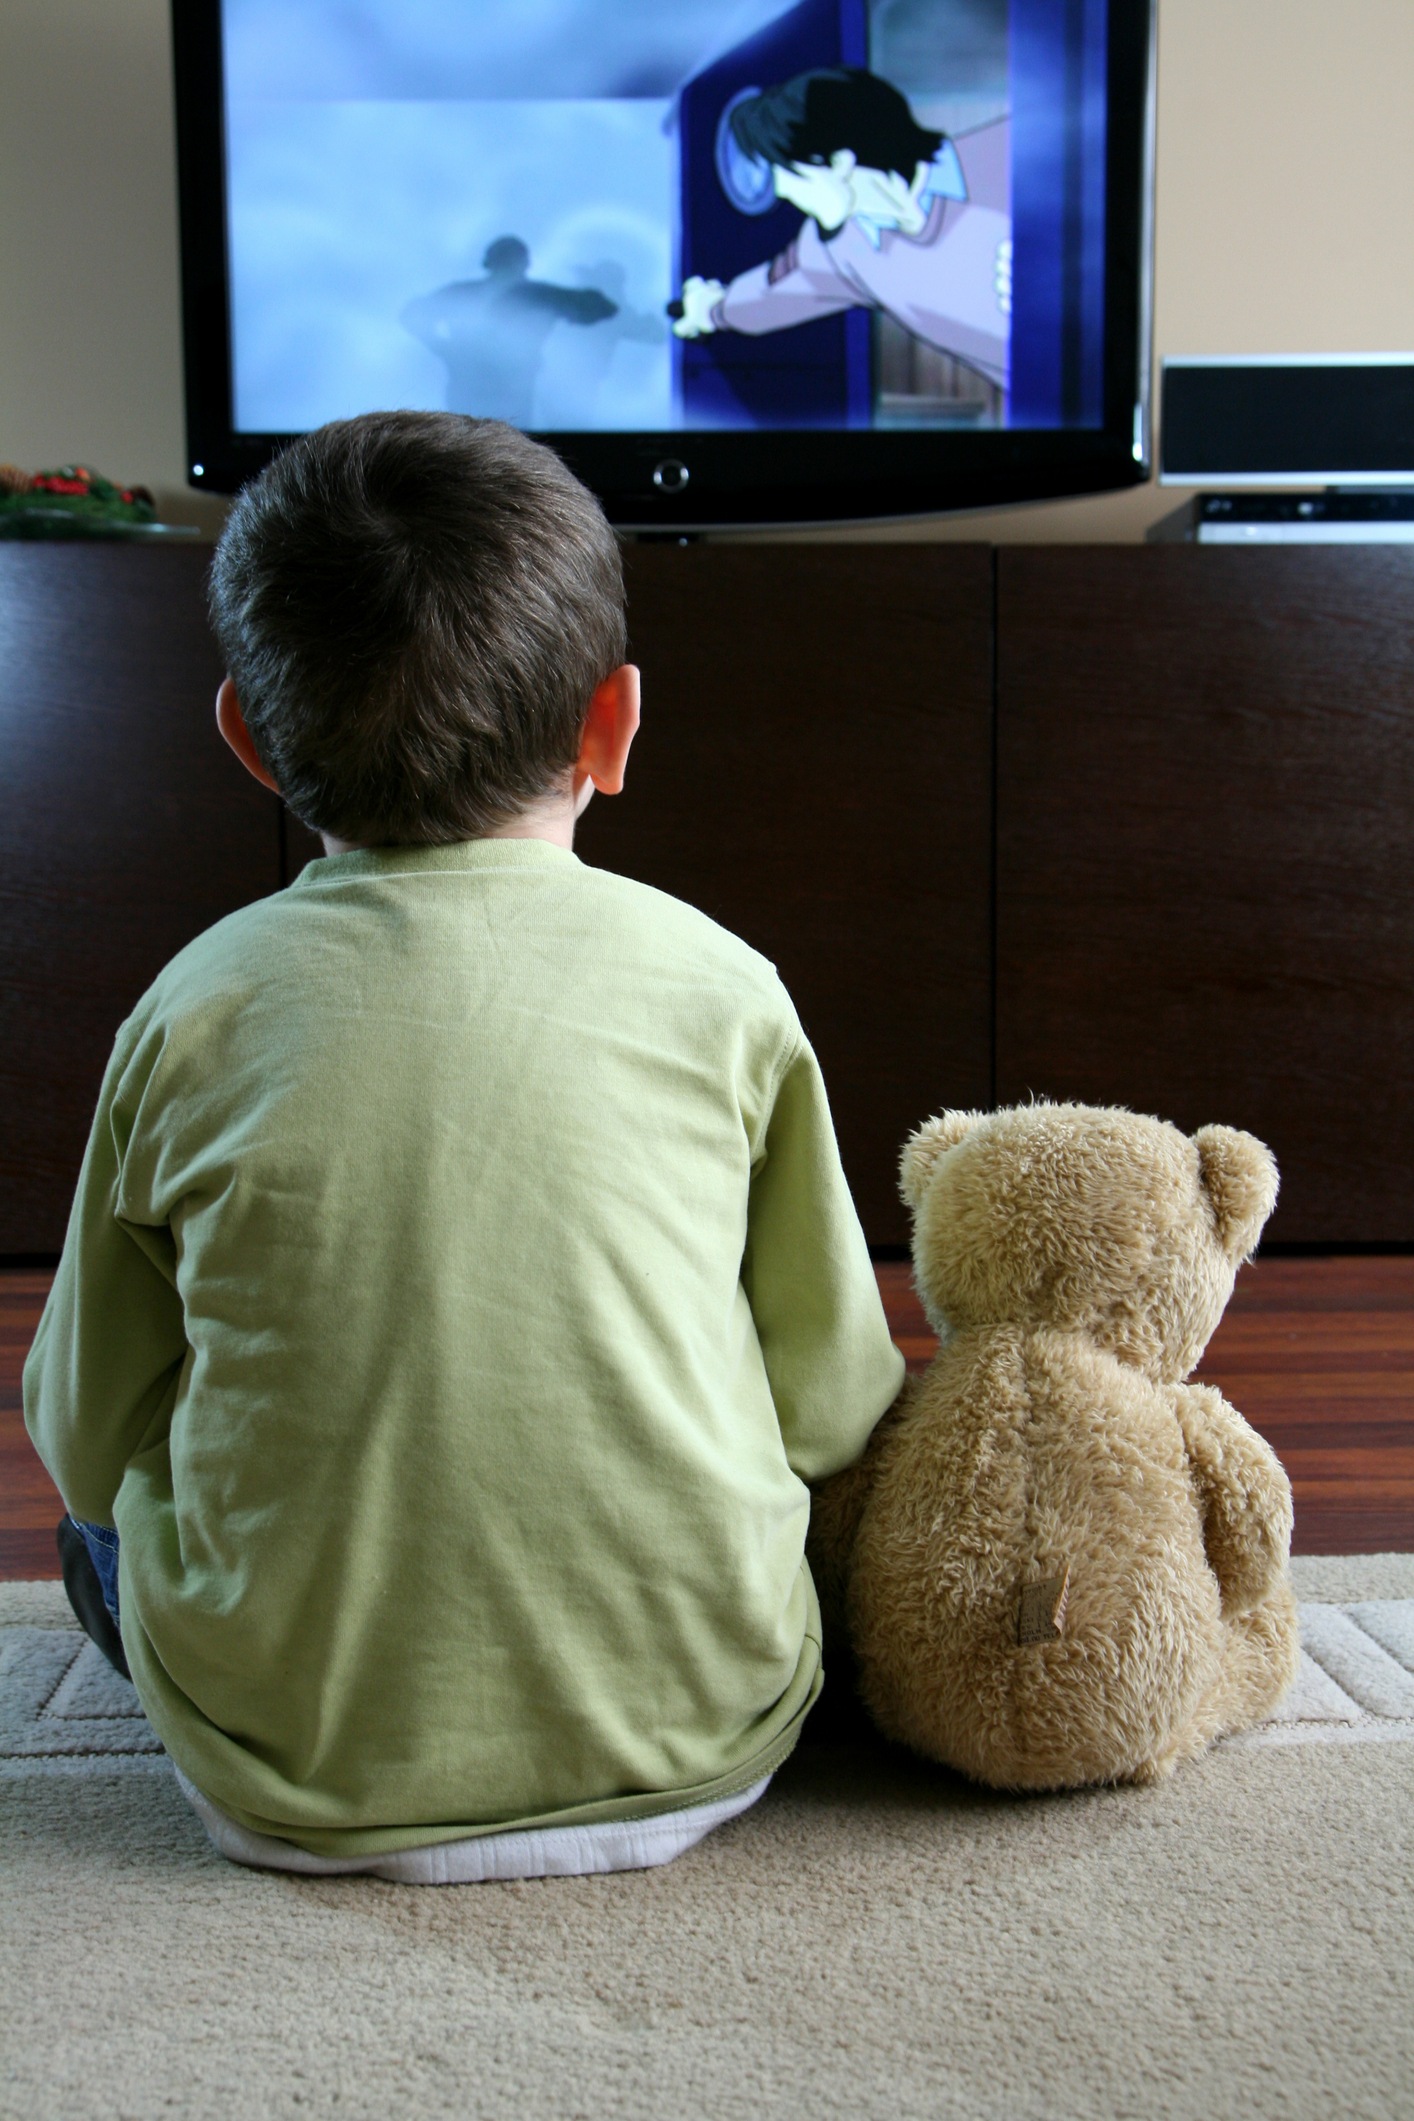 Ways to Break Your Kids Away from Screens